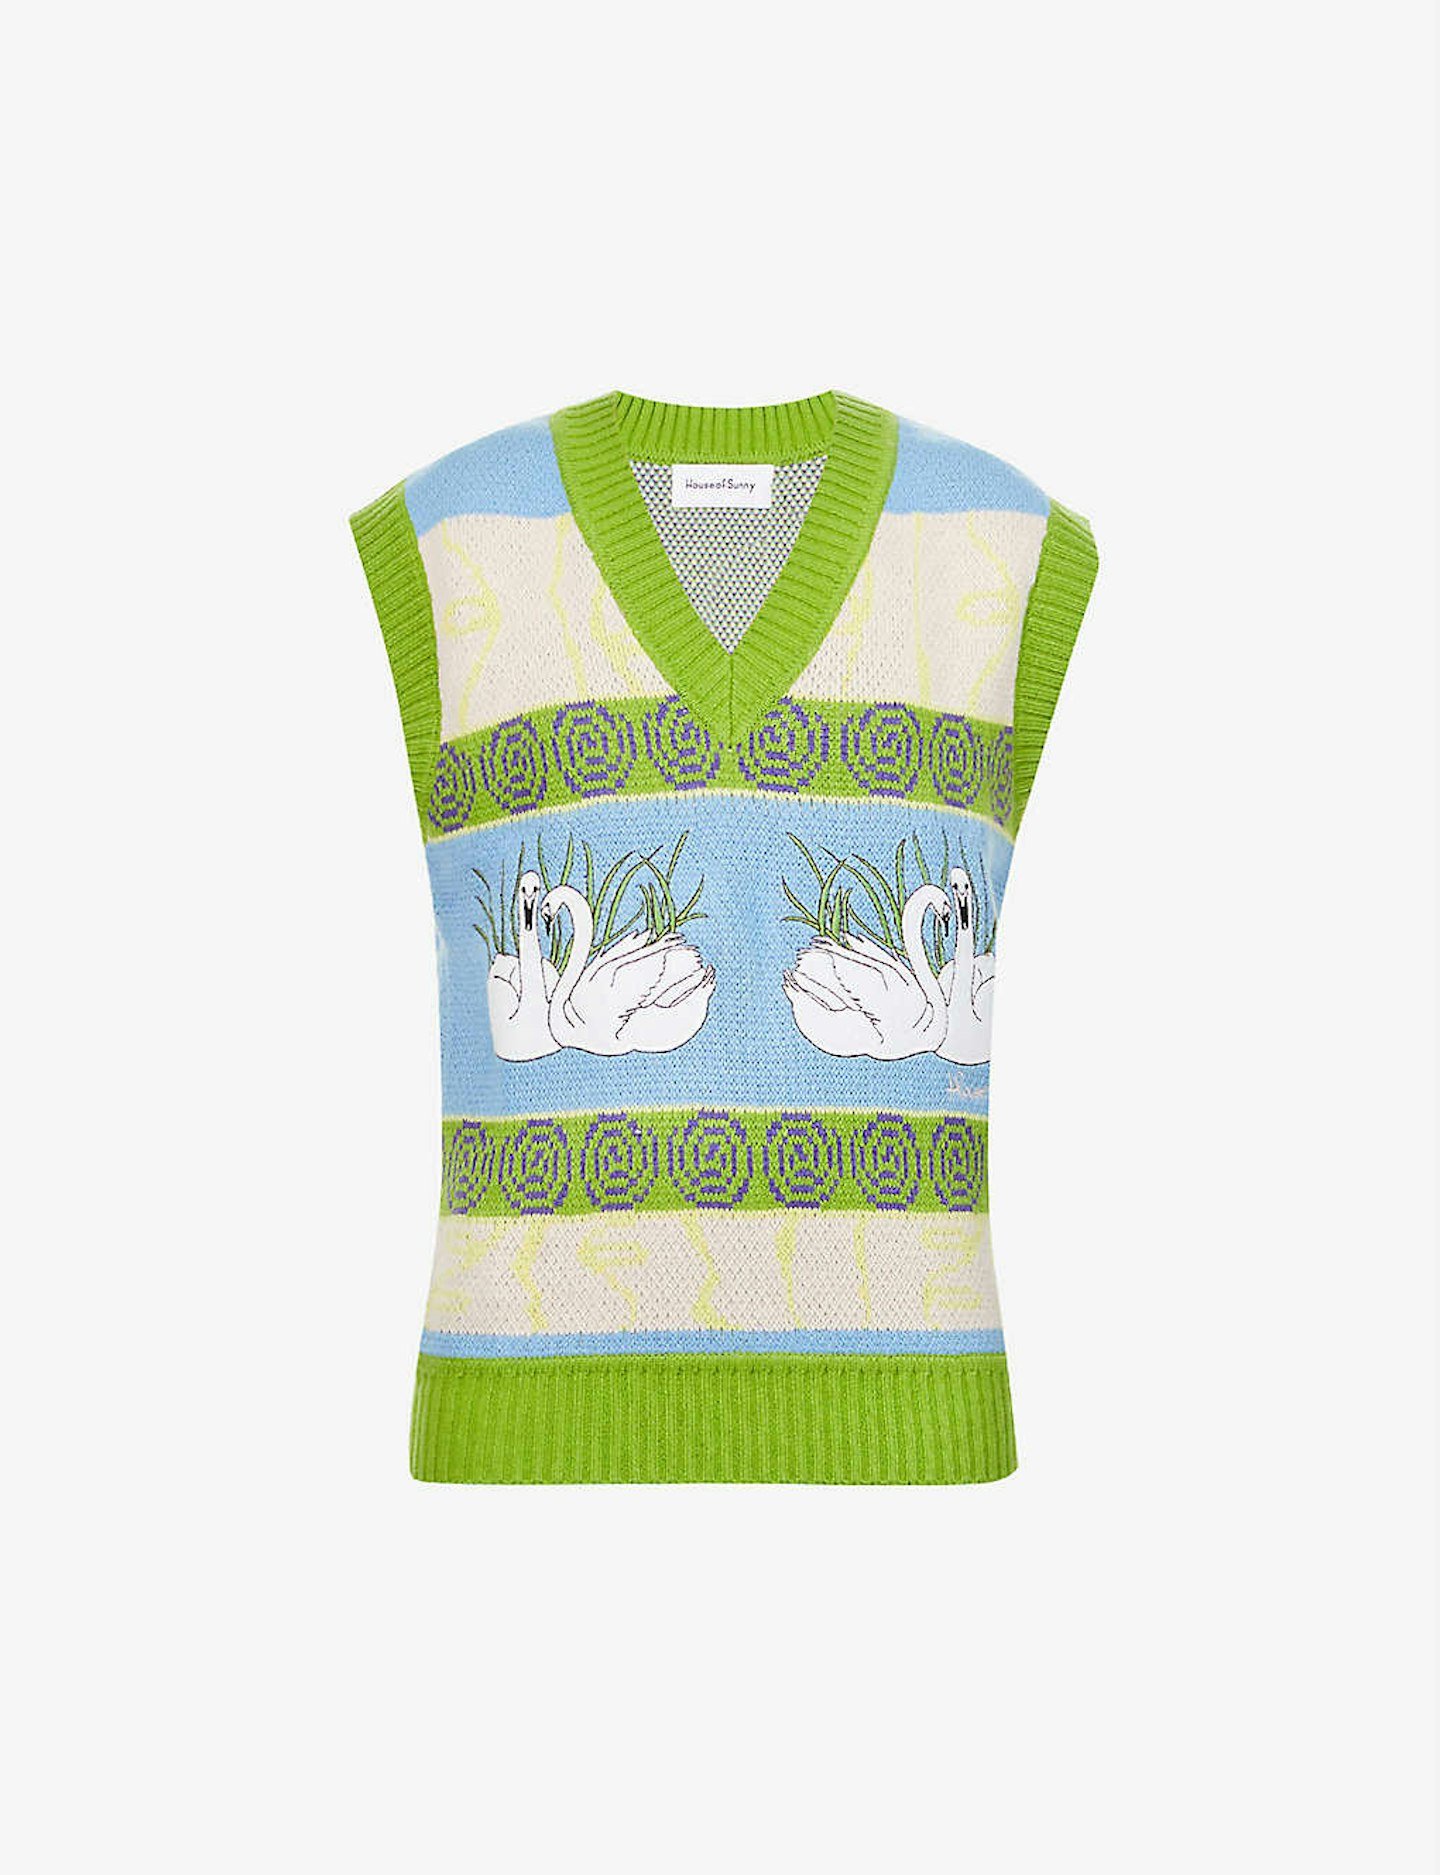 rain bad weather fashion House Of Sunny, Swan Lake sleeveless knitted jumper, £95